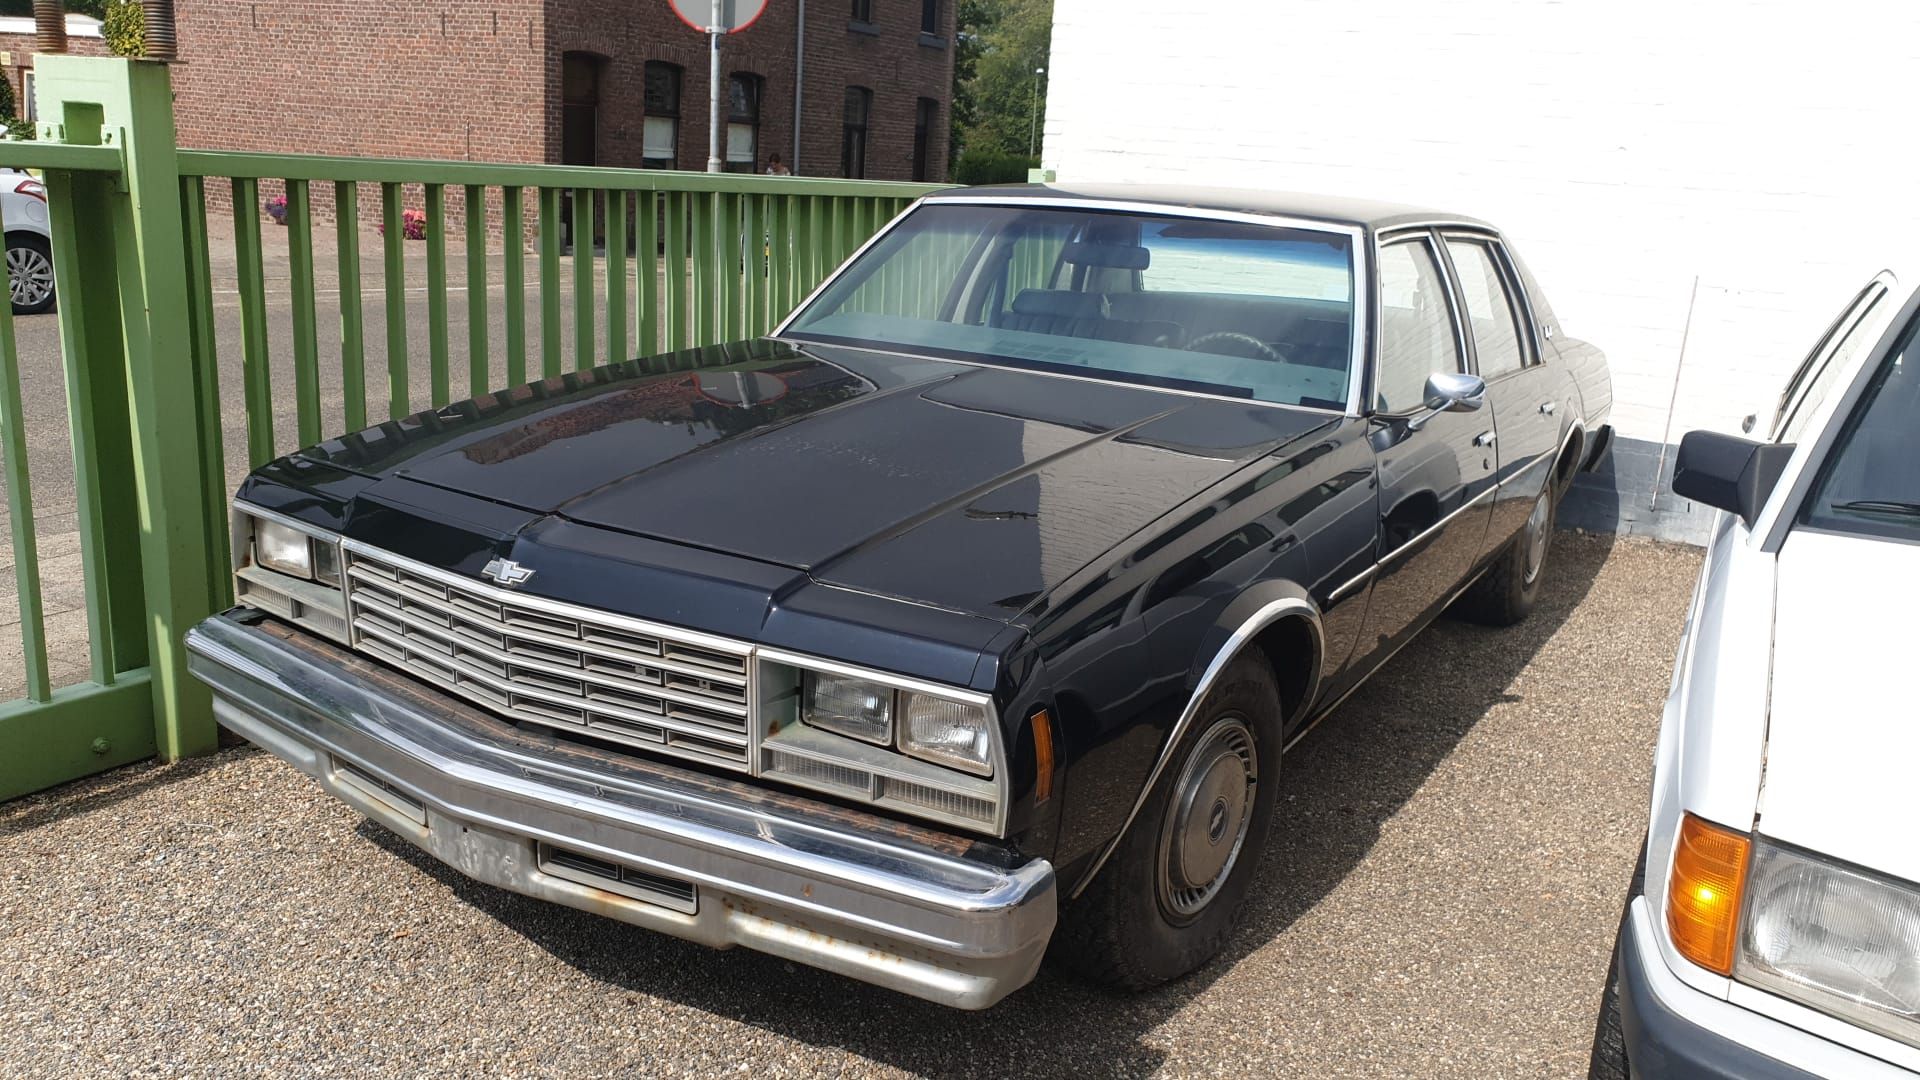 1978 Chervolet Impala This item has reduced buyer's premium of 14,5% including V&hellip;